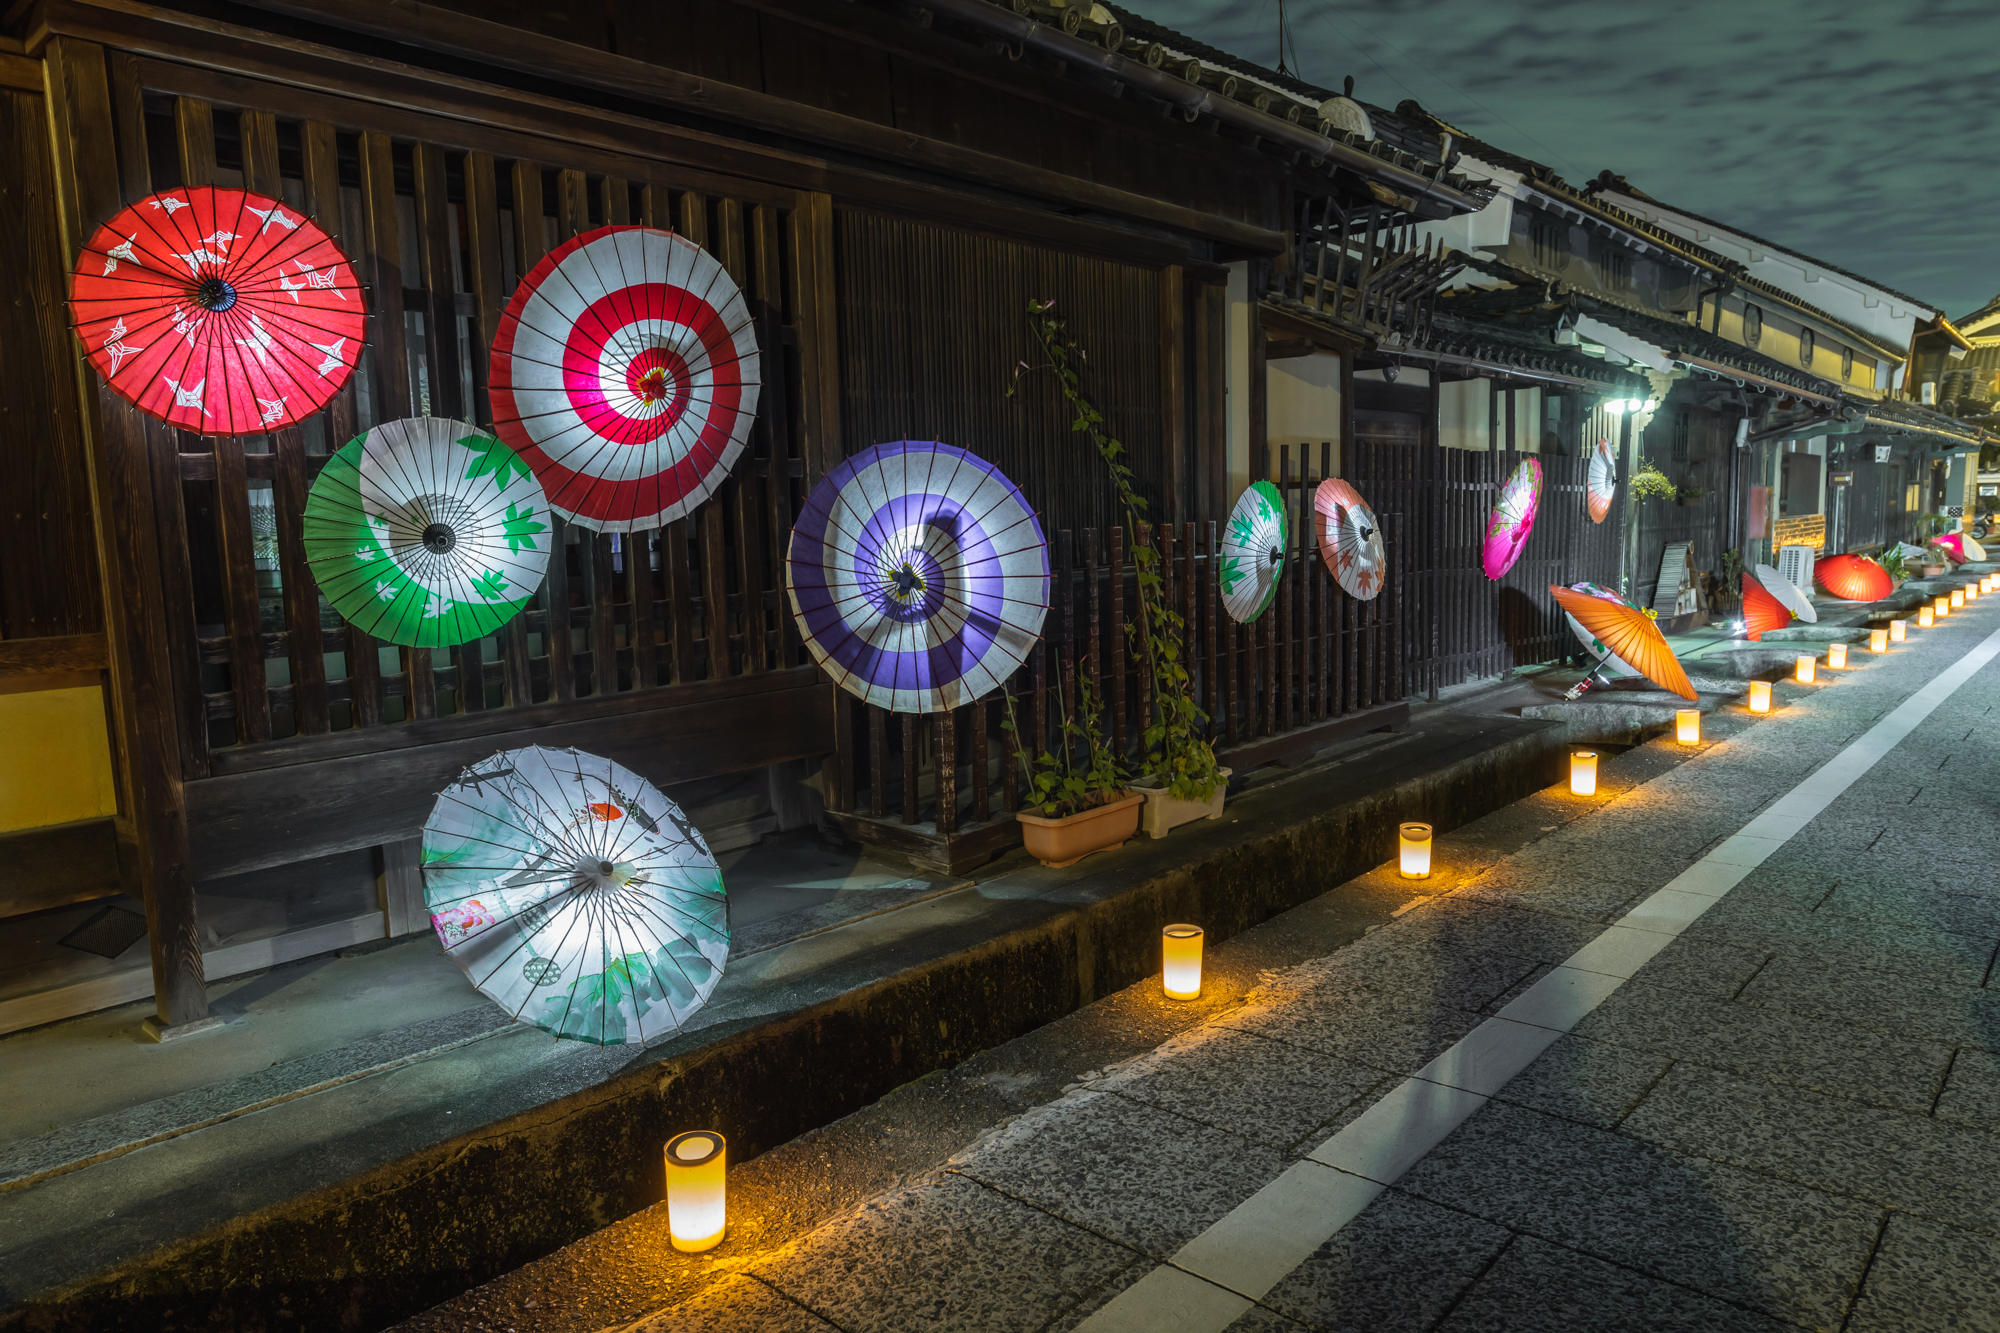 NIKON-CORPORATION_NIKON-D850_2882828338-2882932307_21295 奈良県　明日香村 飛鳥光の回廊( 奈良県の秋におすすめの幻想的なライトアップ・夜景が観れる写真スポット!撮影した写真の紹介、アクセス情報や撮影ポイントなど!)　